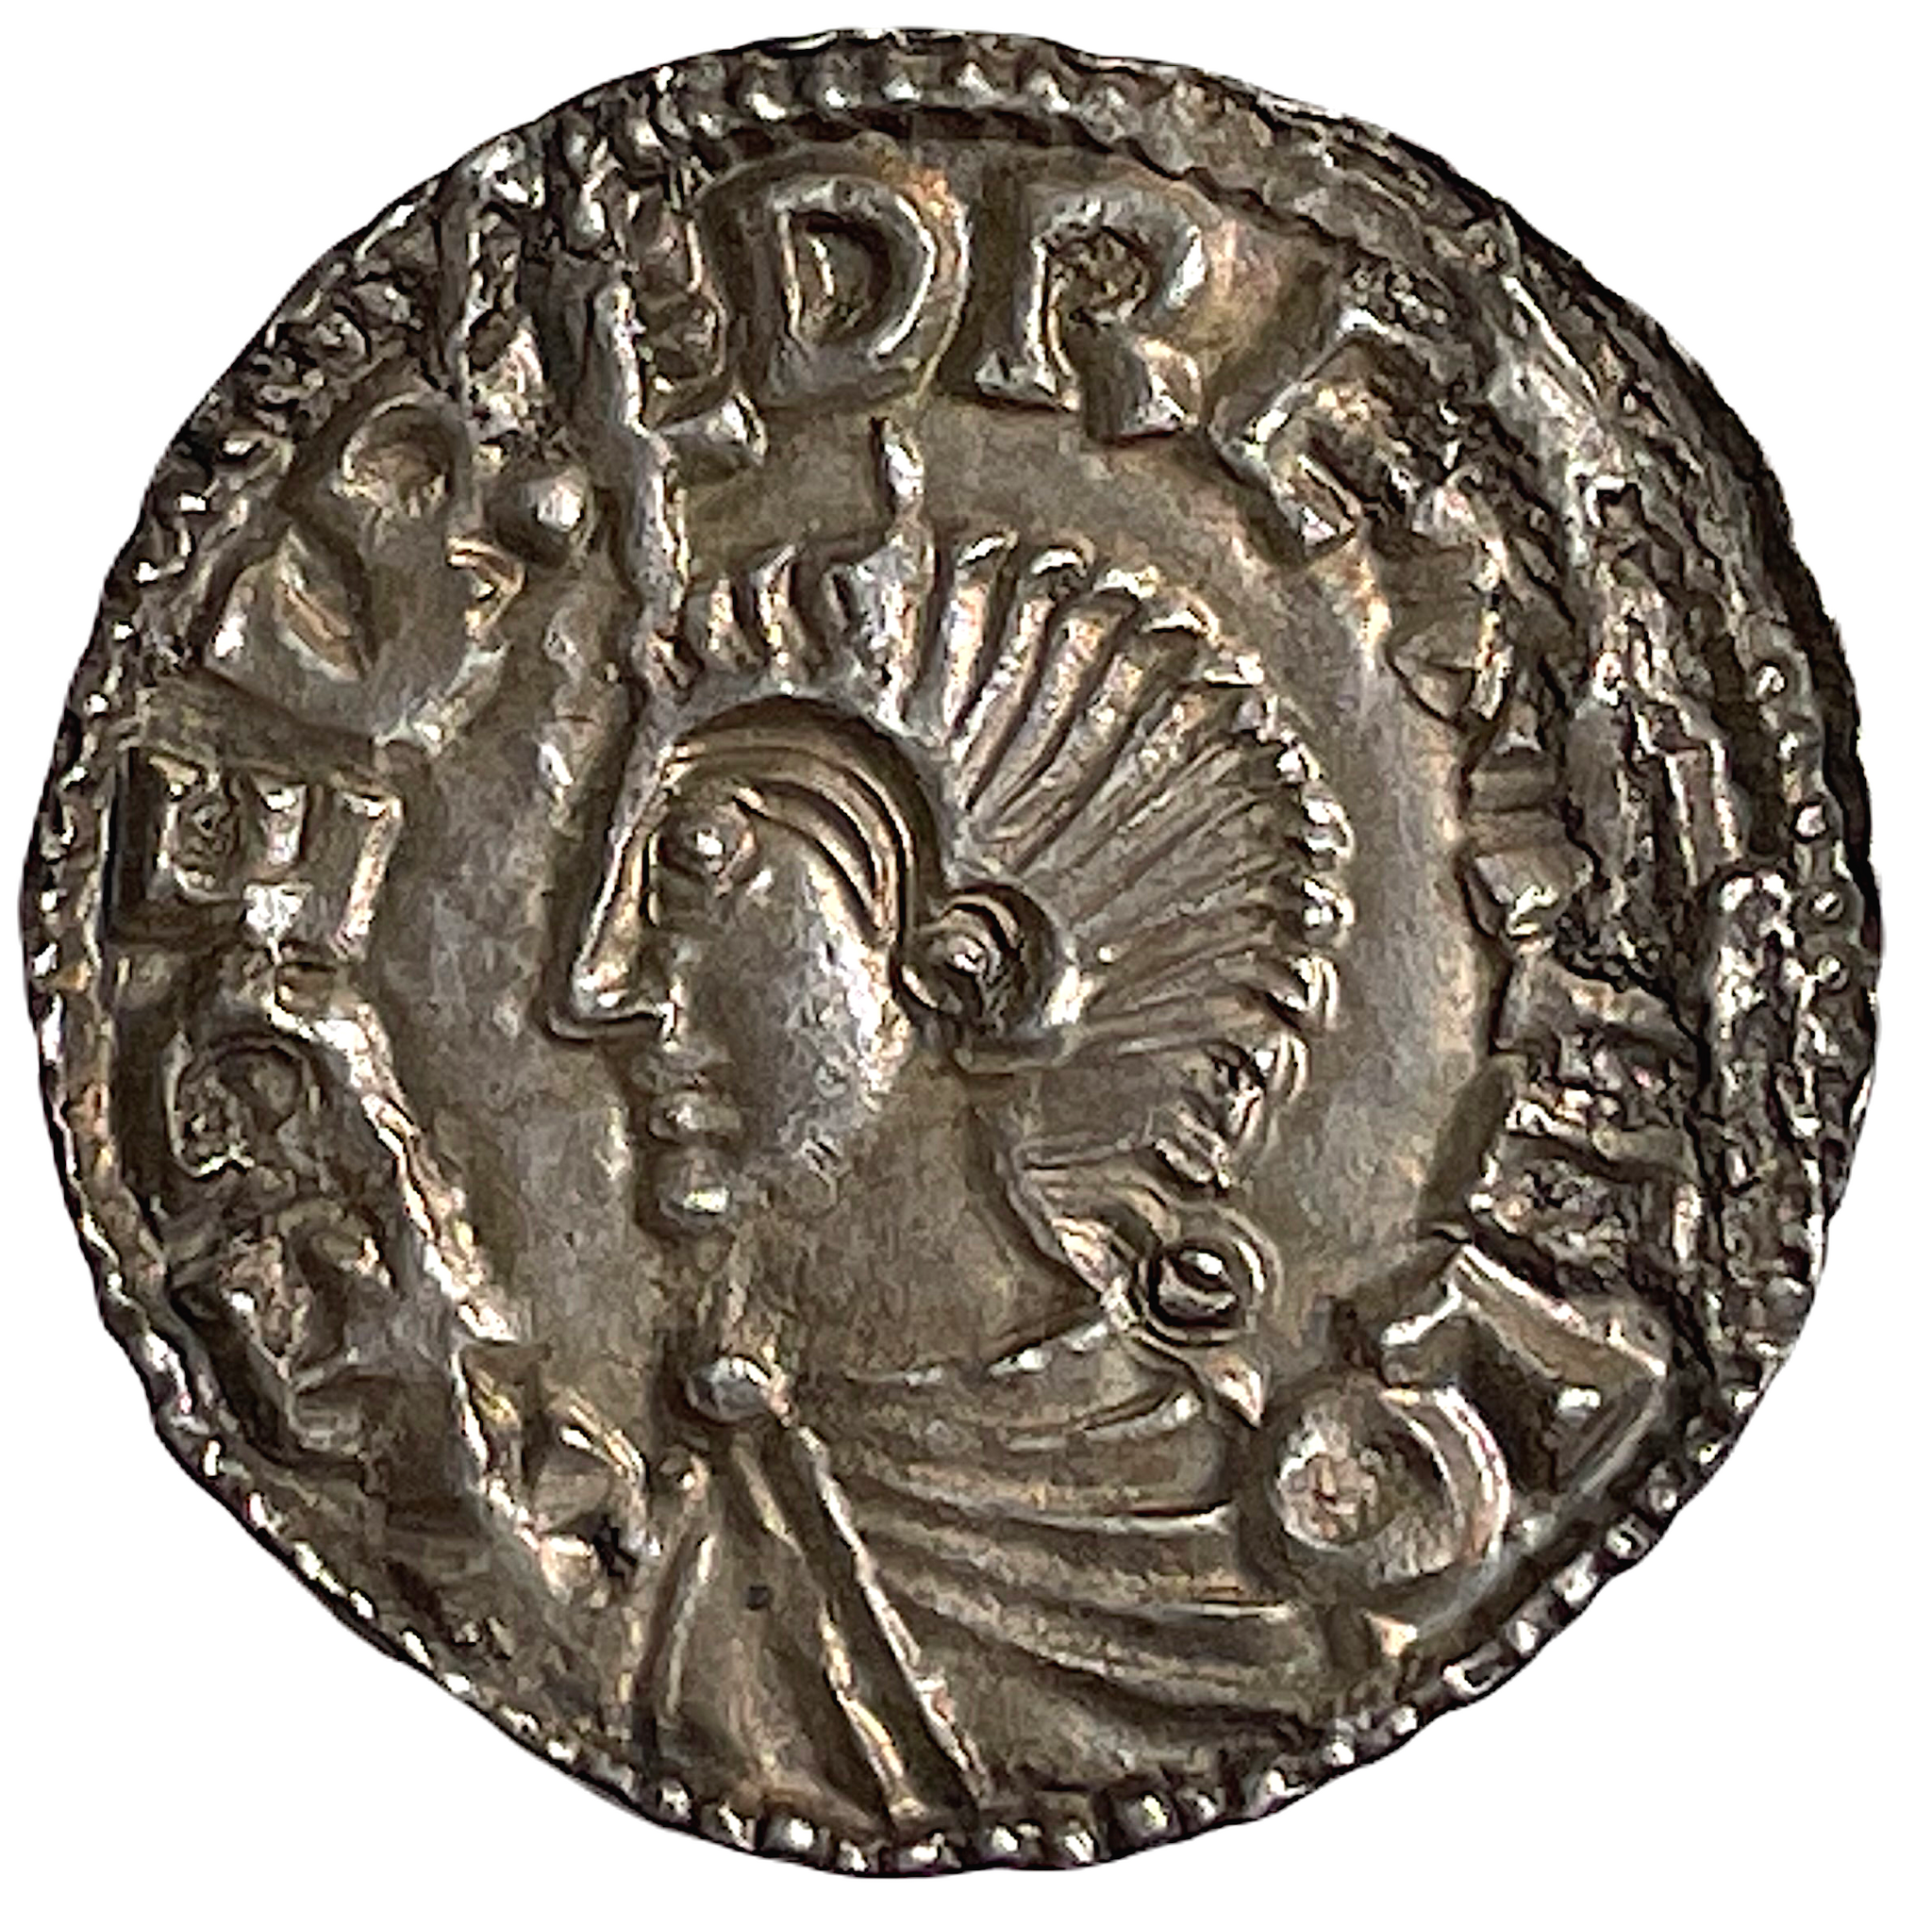 Æthelred II (978-1016). LONDON. Penny. Long cross. Mm OSVLF